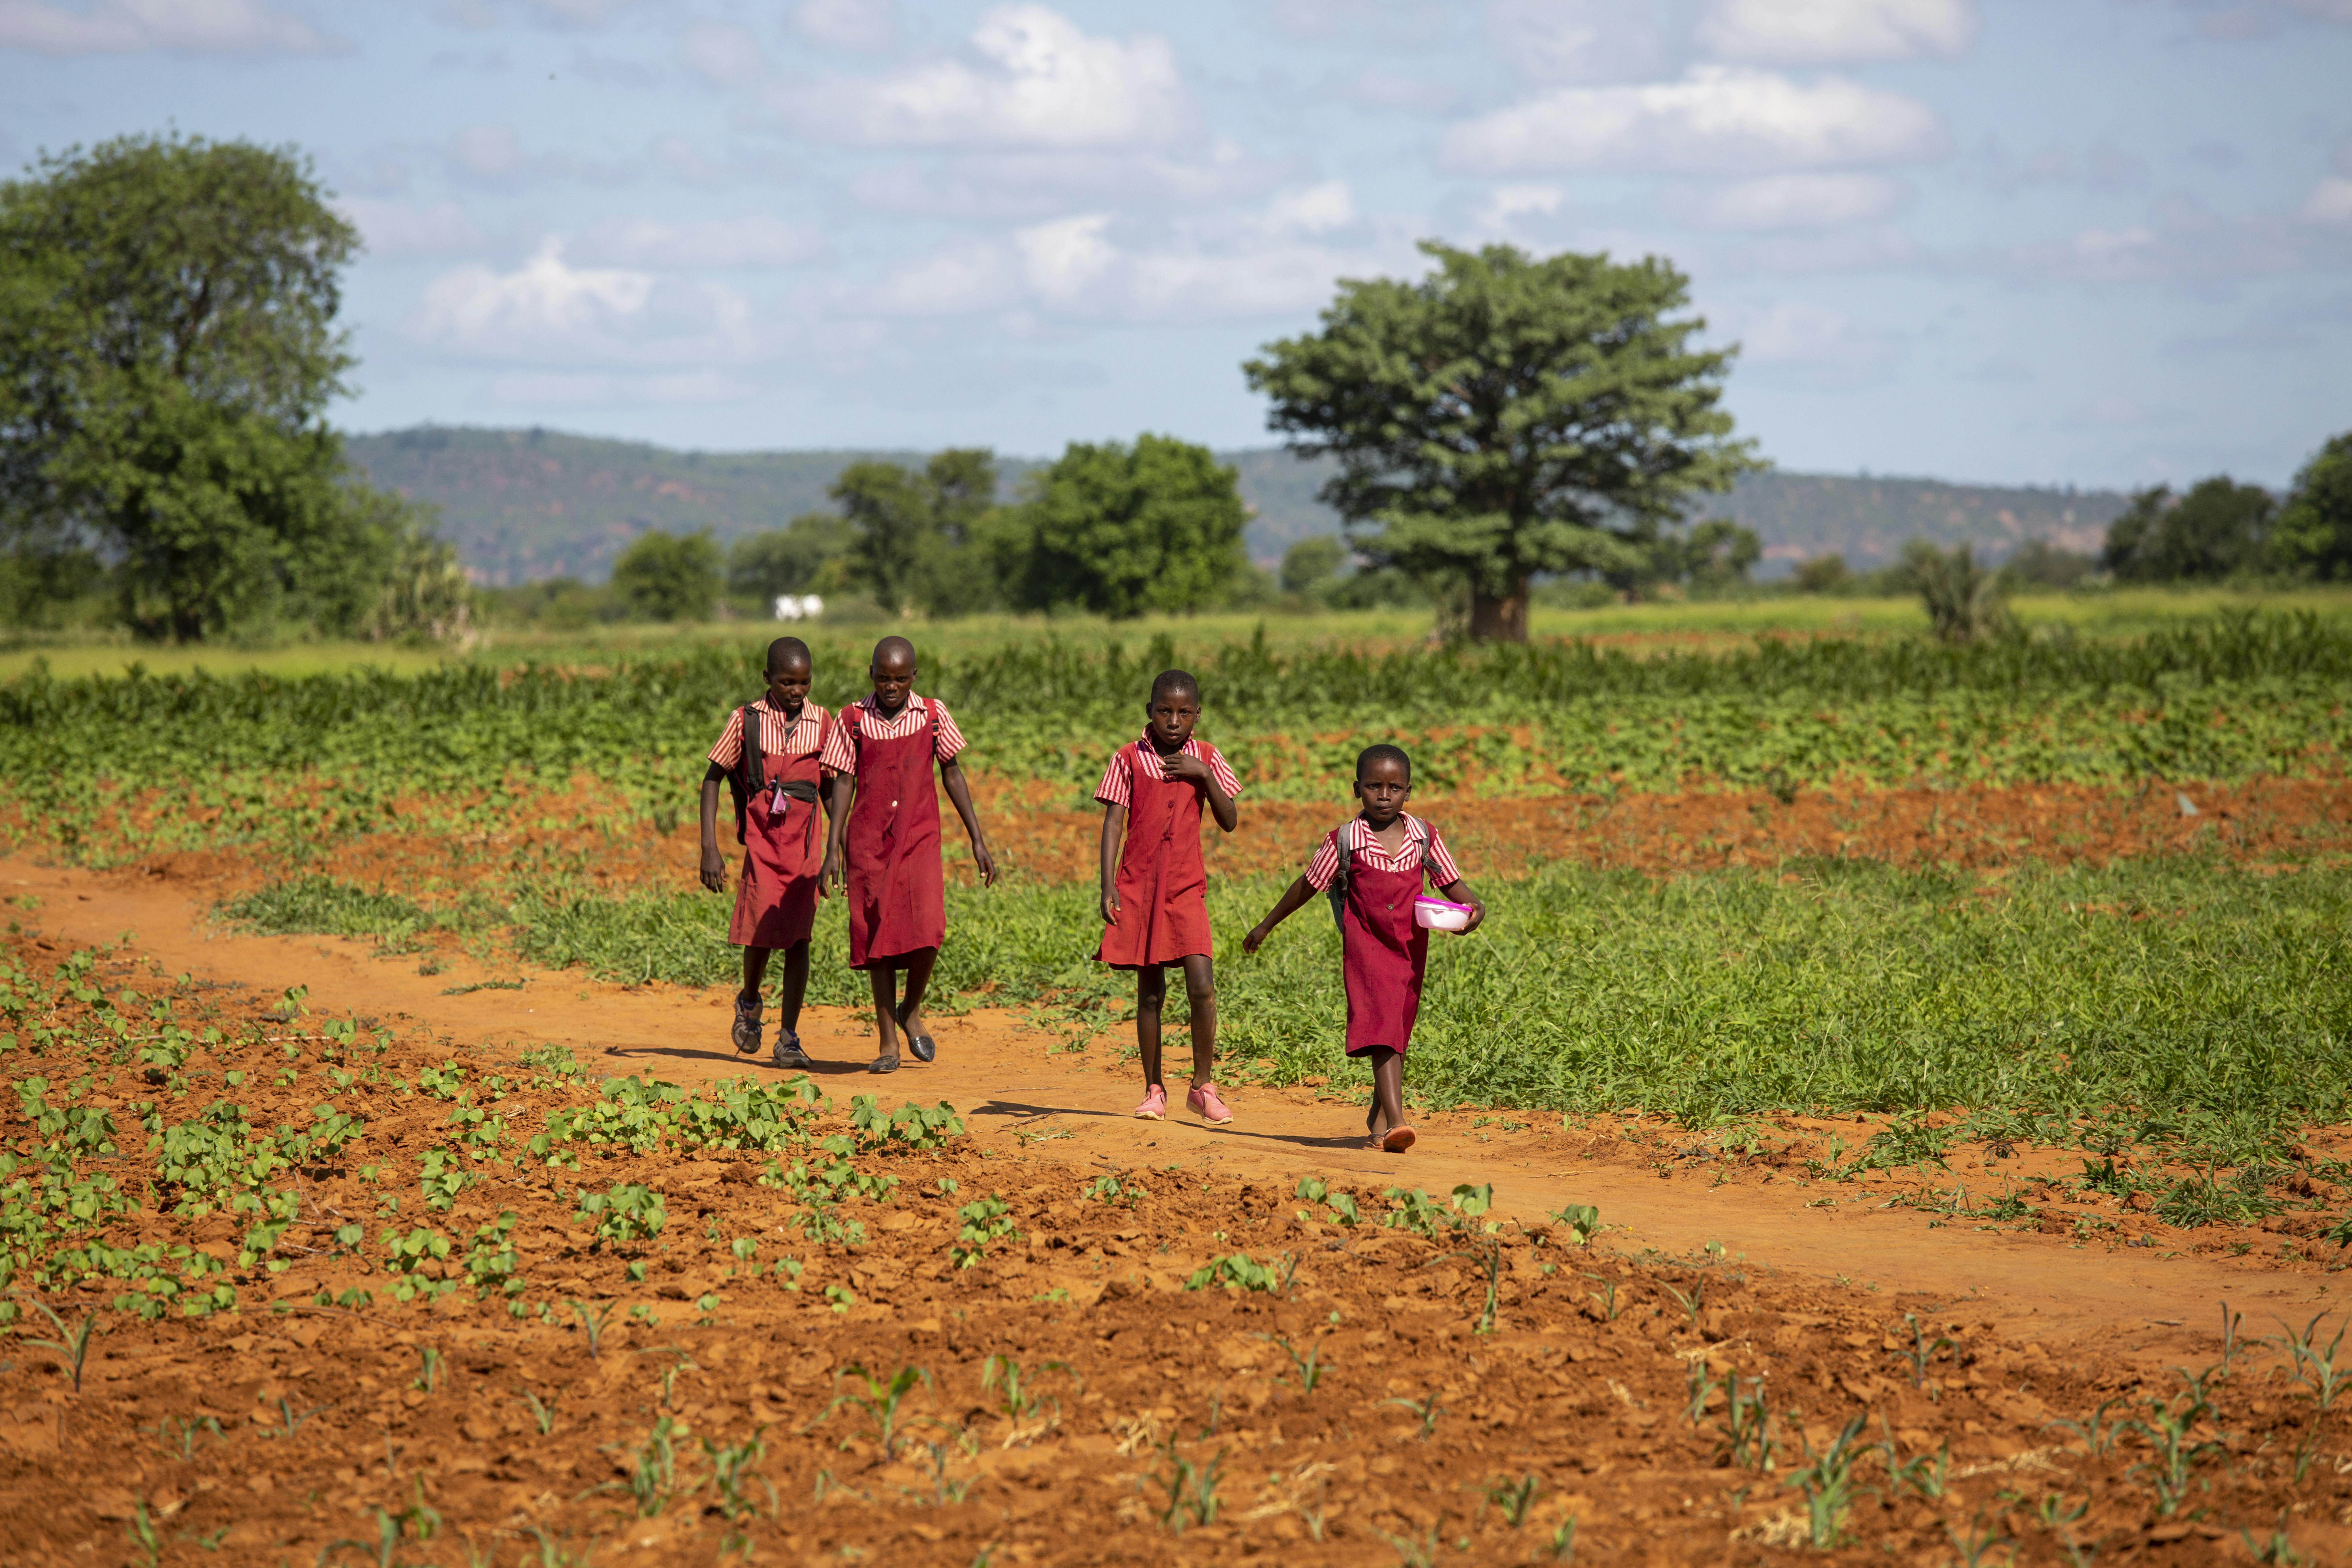 Bambine camminano tra i campi coltivati in Zimbawe.